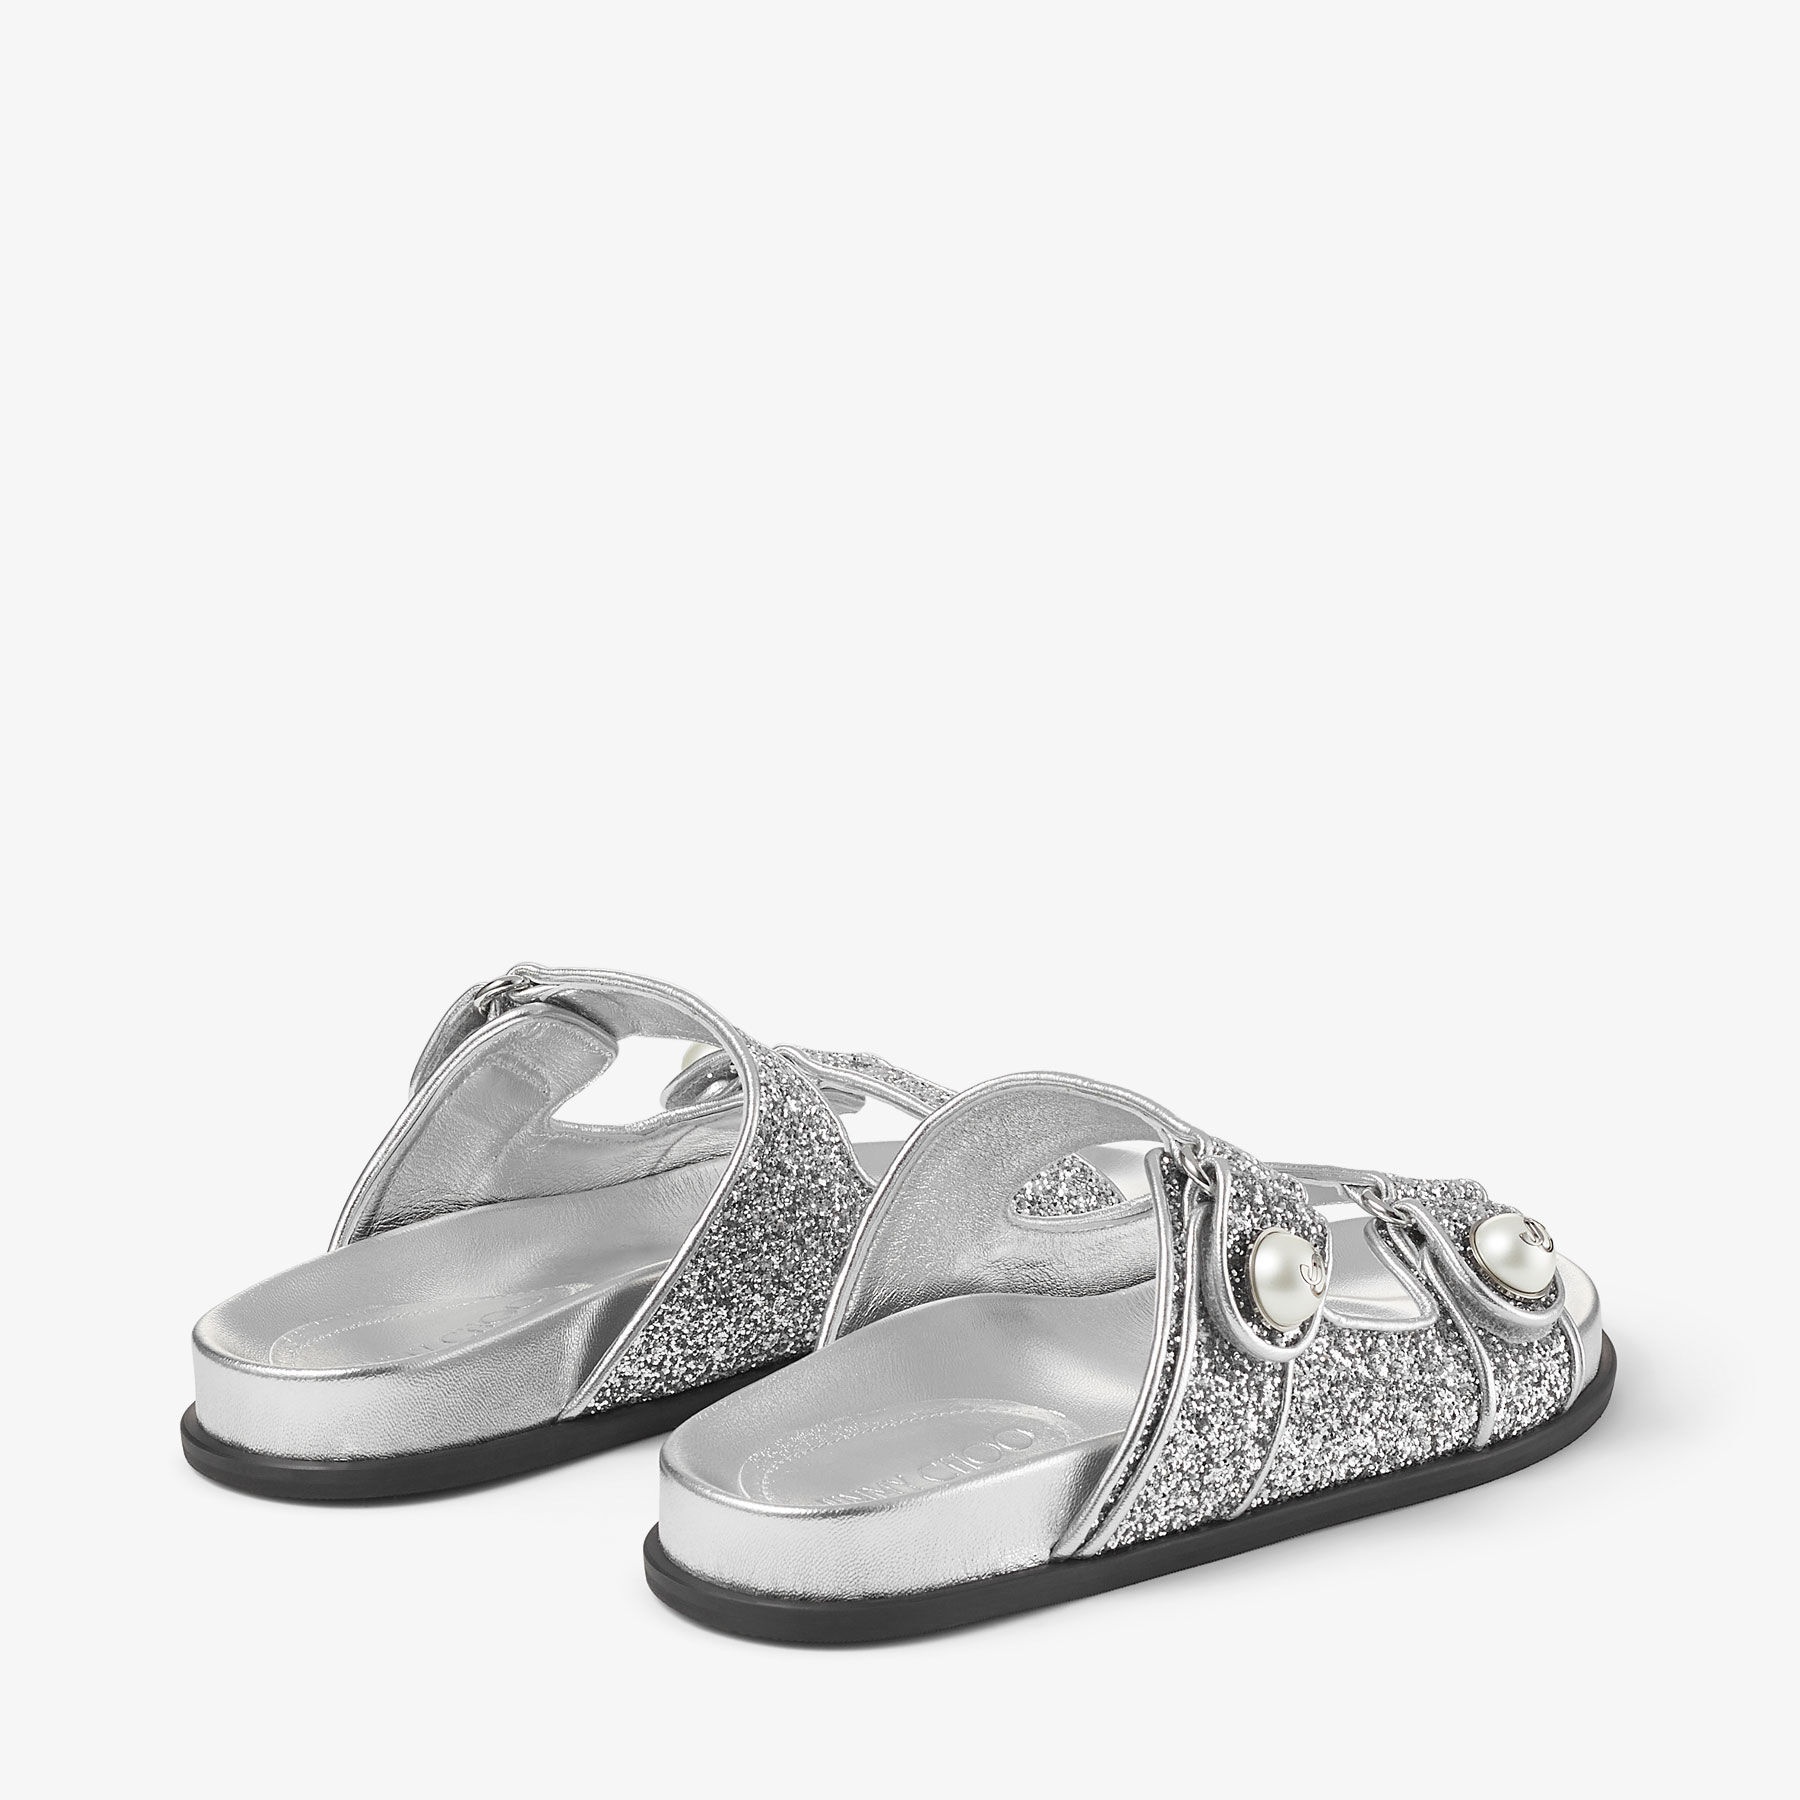 Fayence Sandal
Silver Metallic Nappa Sandals - 5